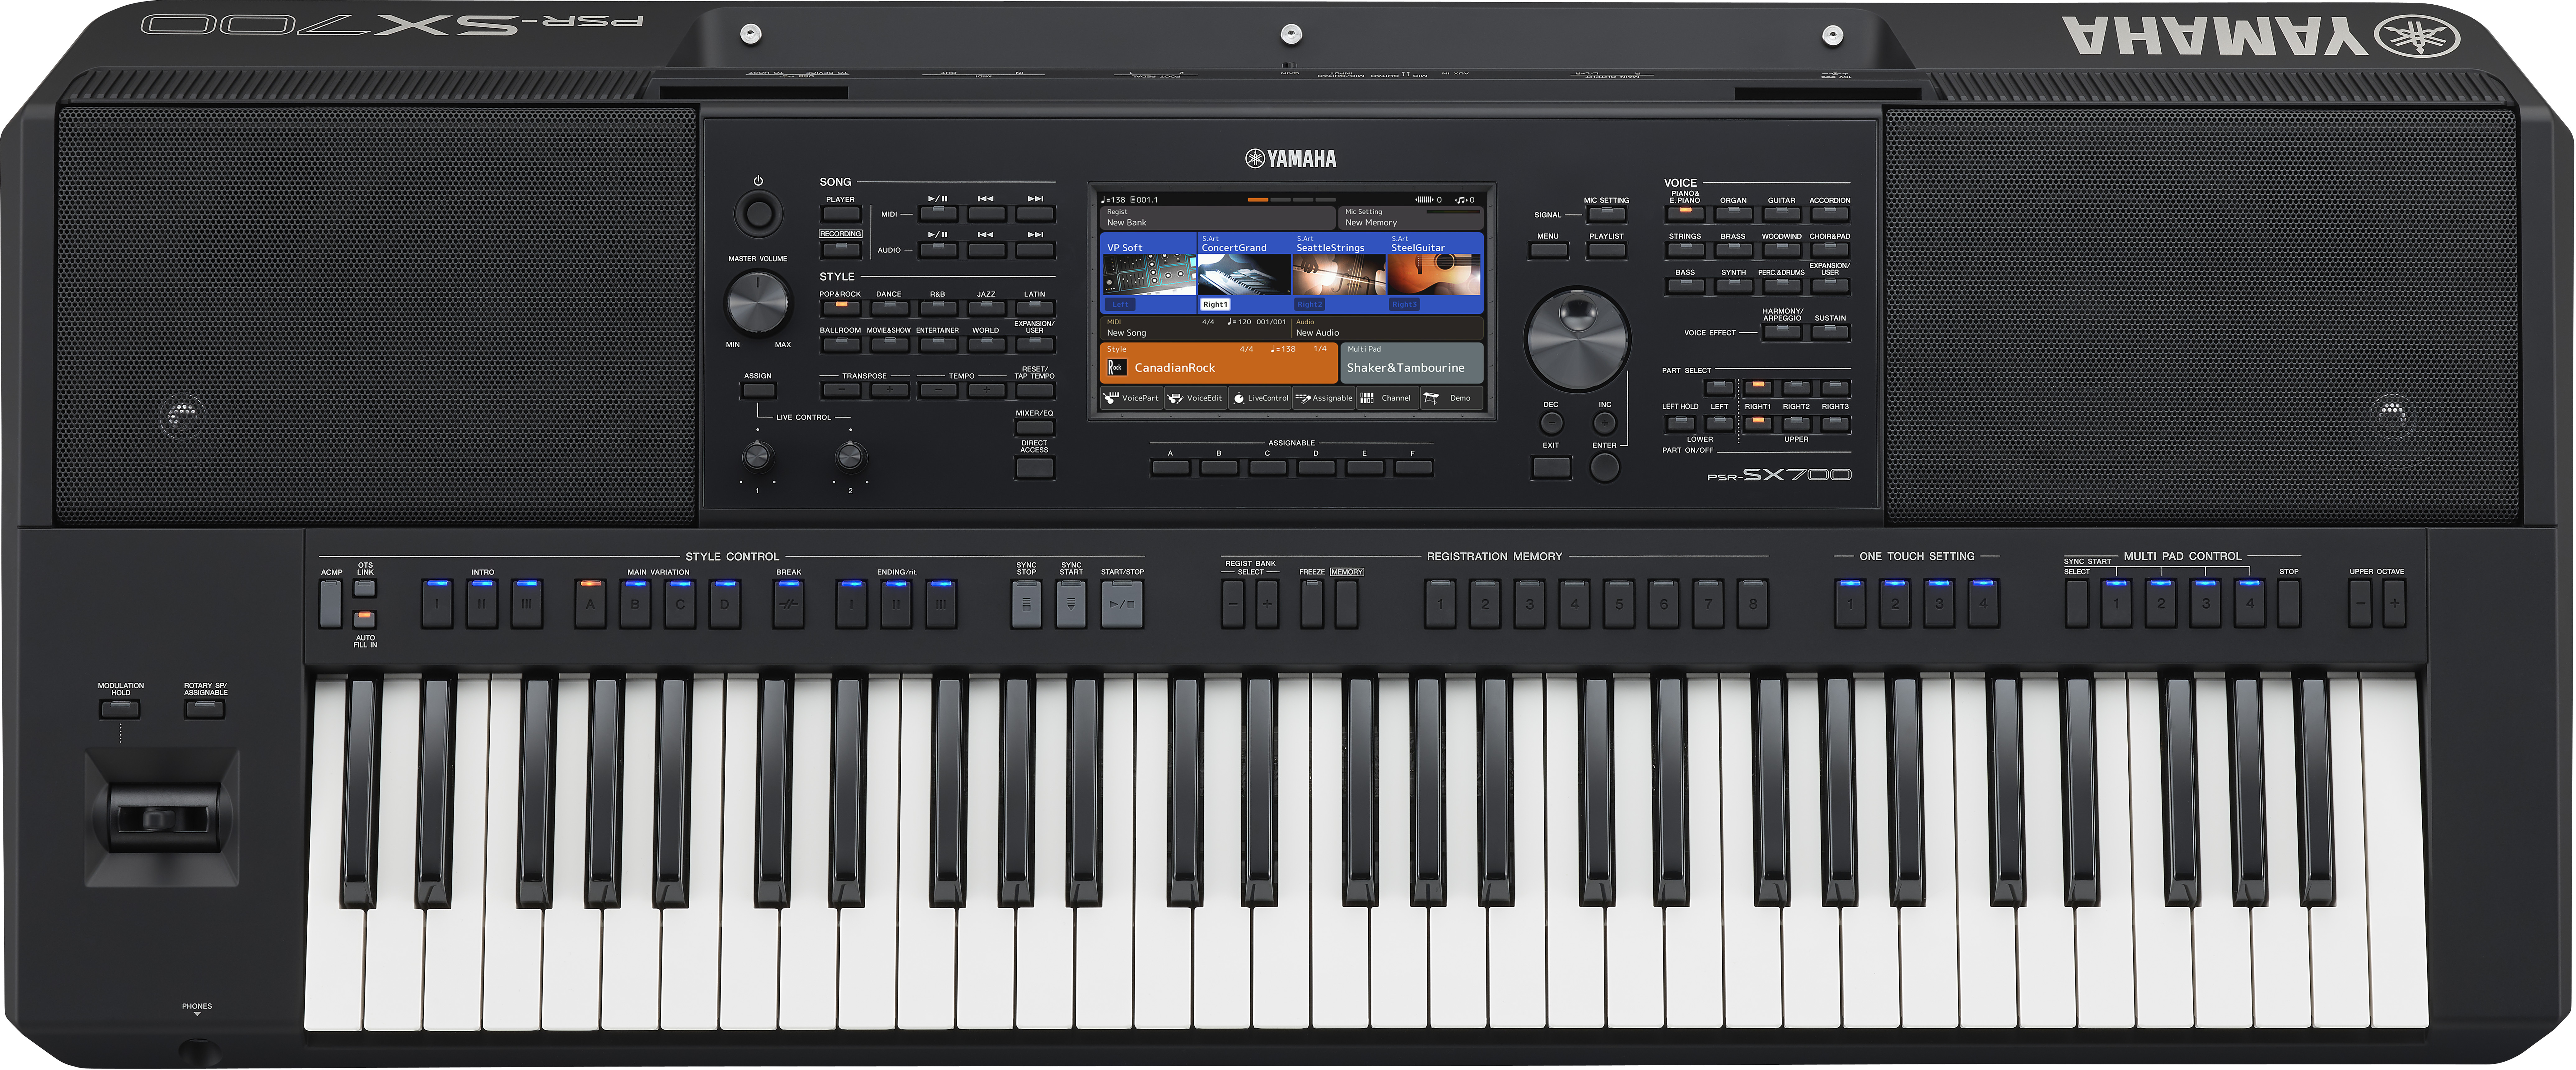 Yamaha Psr-sx700 - Entertainer Keyboard - Main picture